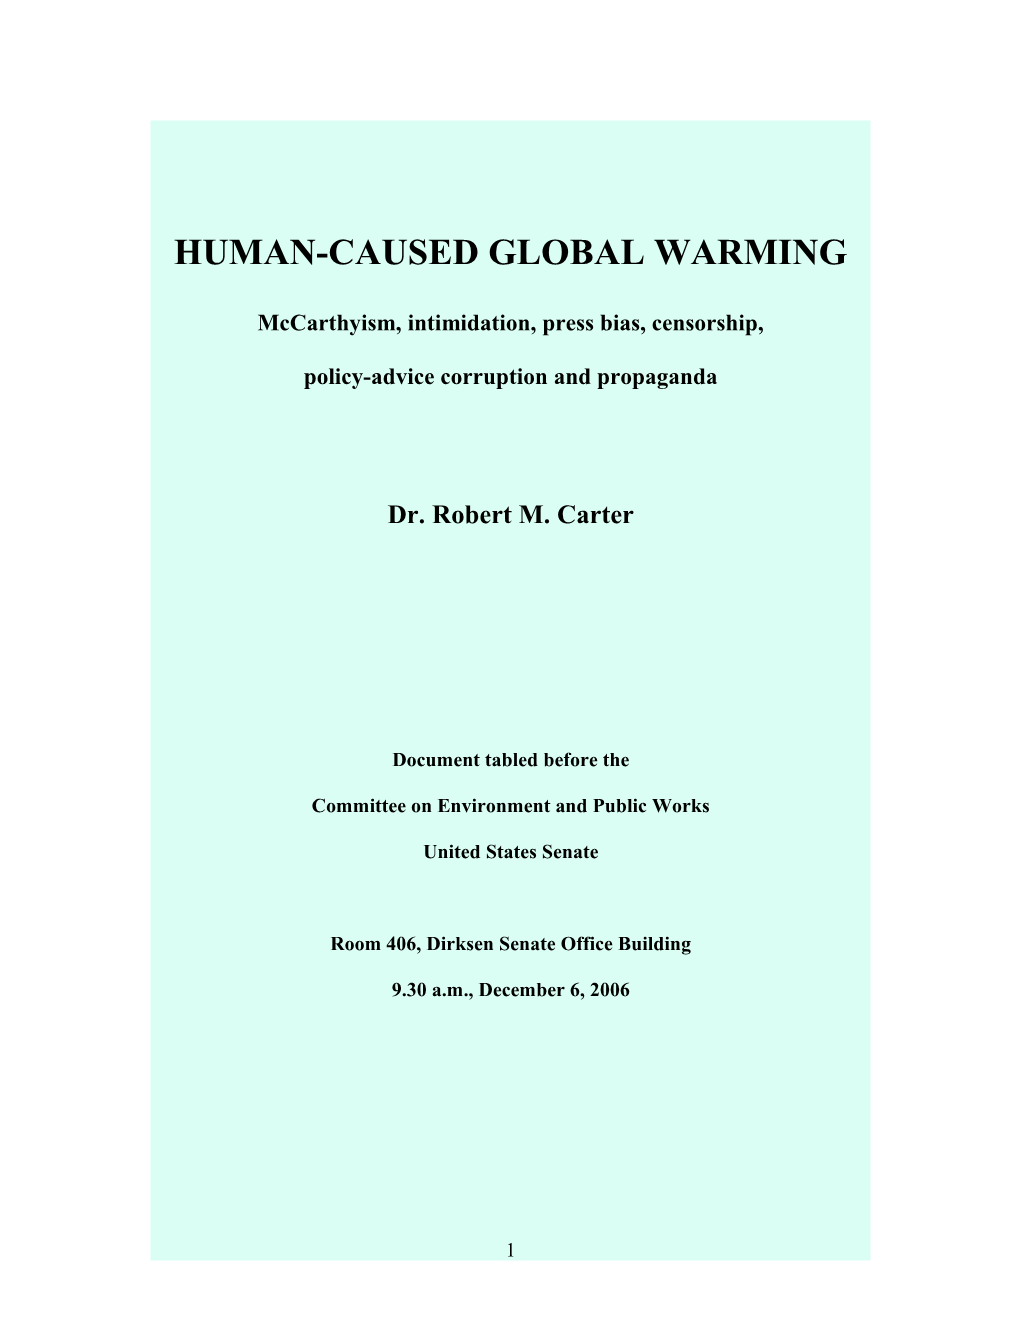 Human-Caused Global Warming